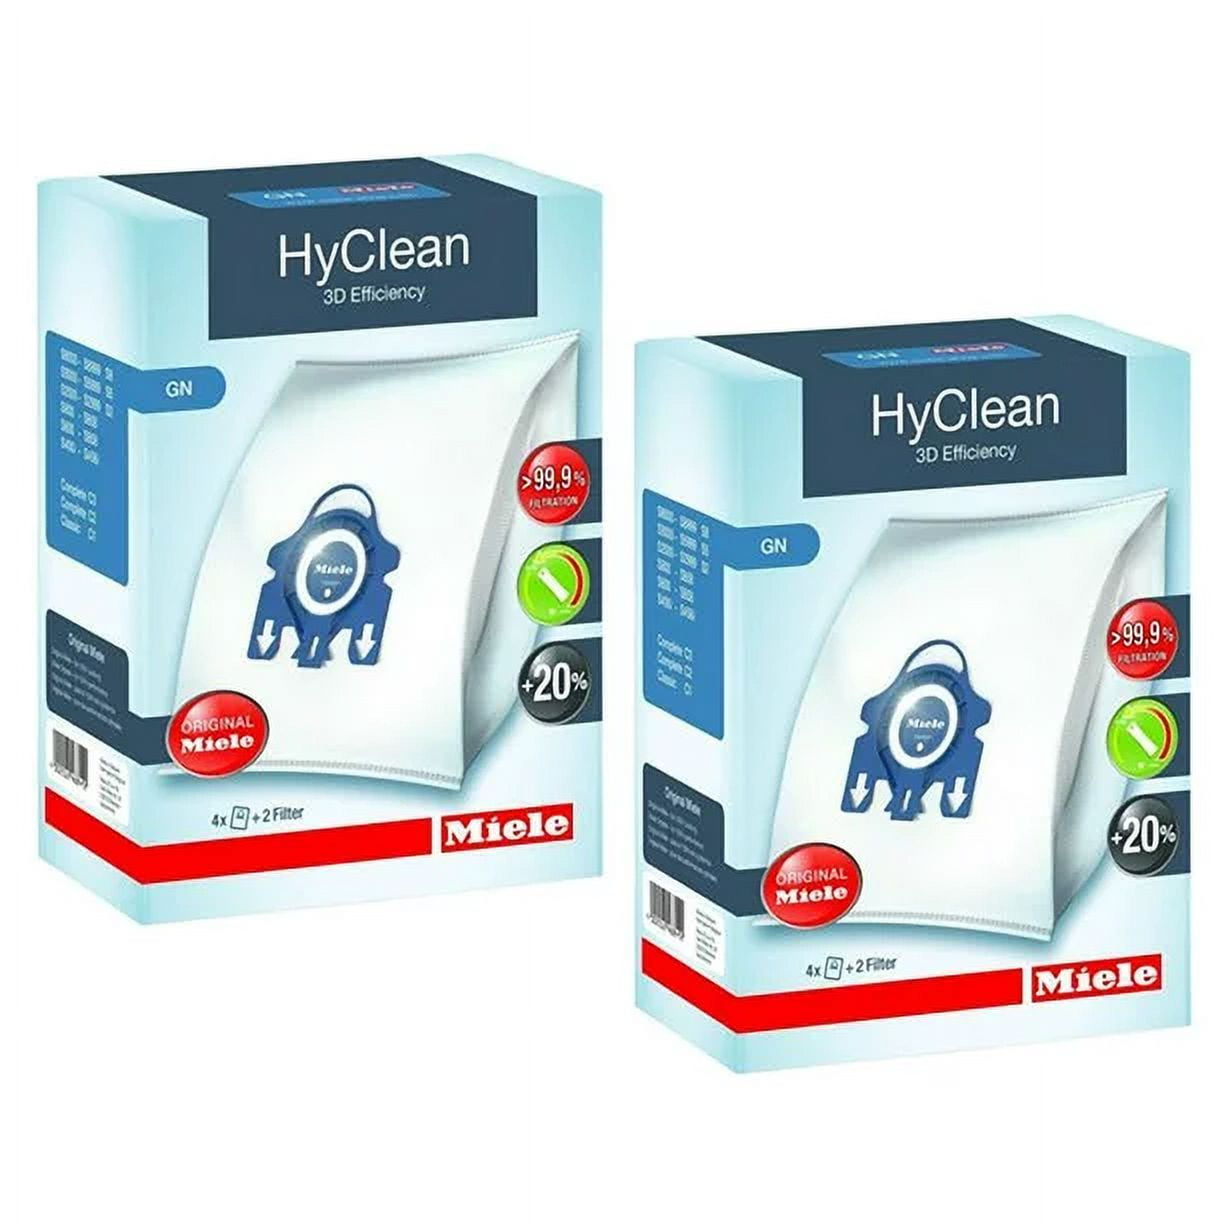  Miele Type GN 3D Efficiency HyClean Dust Bag, 8X Dust Bag, 4  Filter